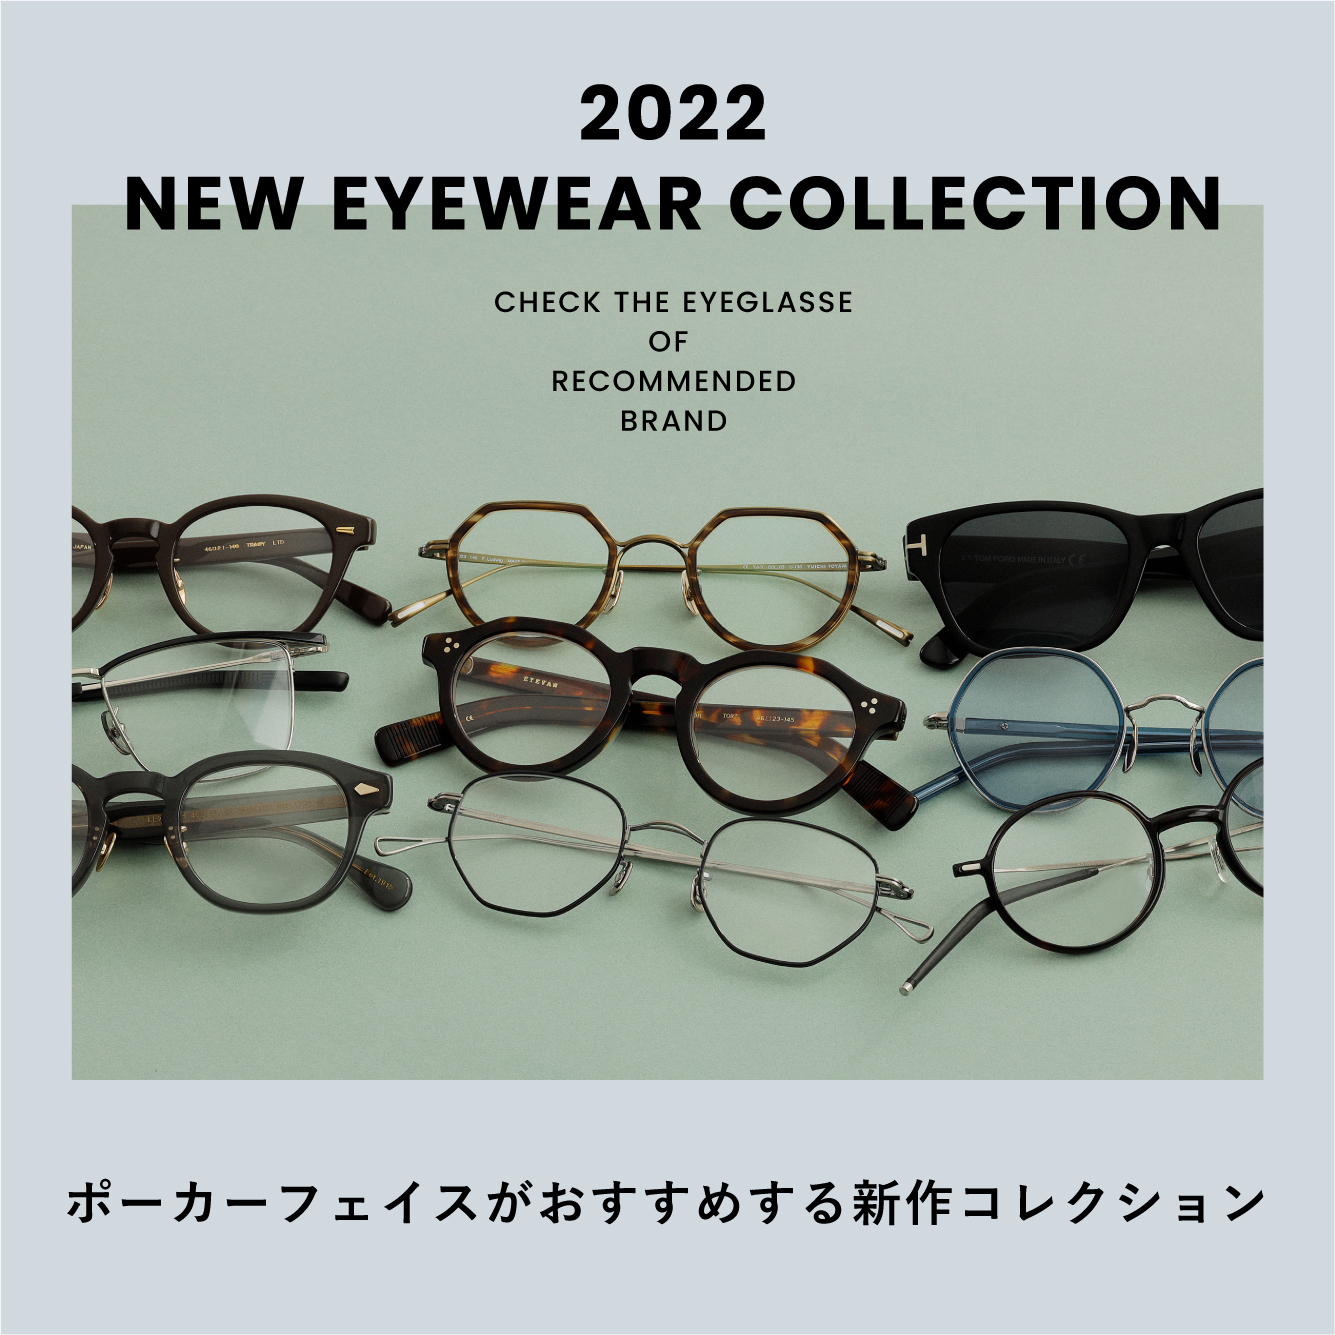 【POKER FACE 2022 NEW EYEWEAR COLLECTION】